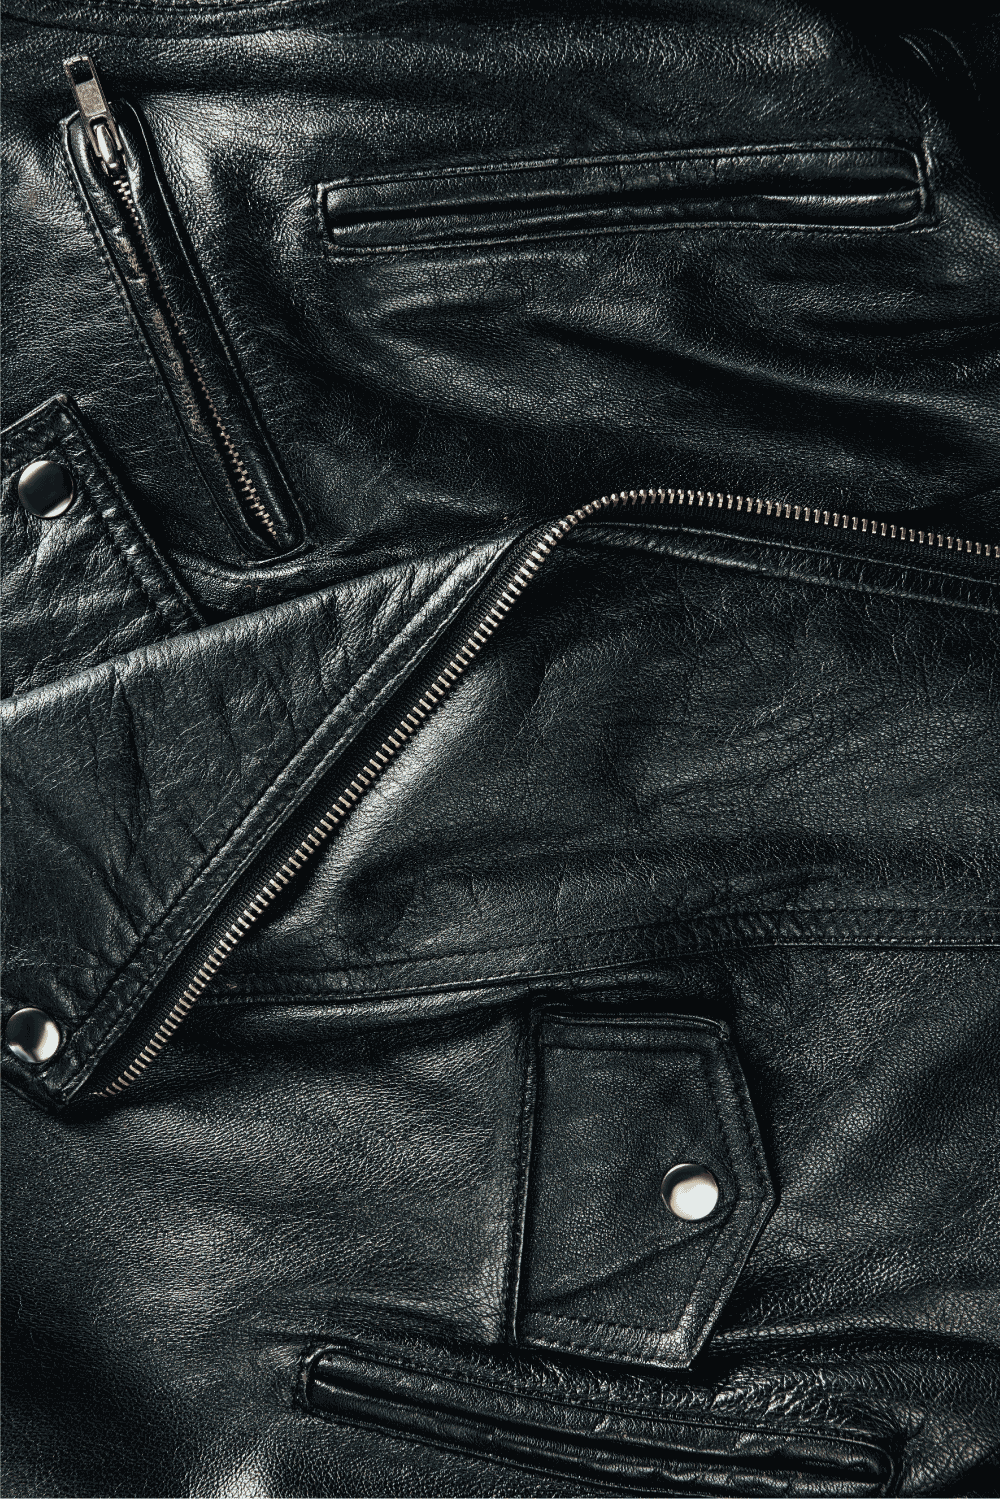 Full frame of black leather jacket